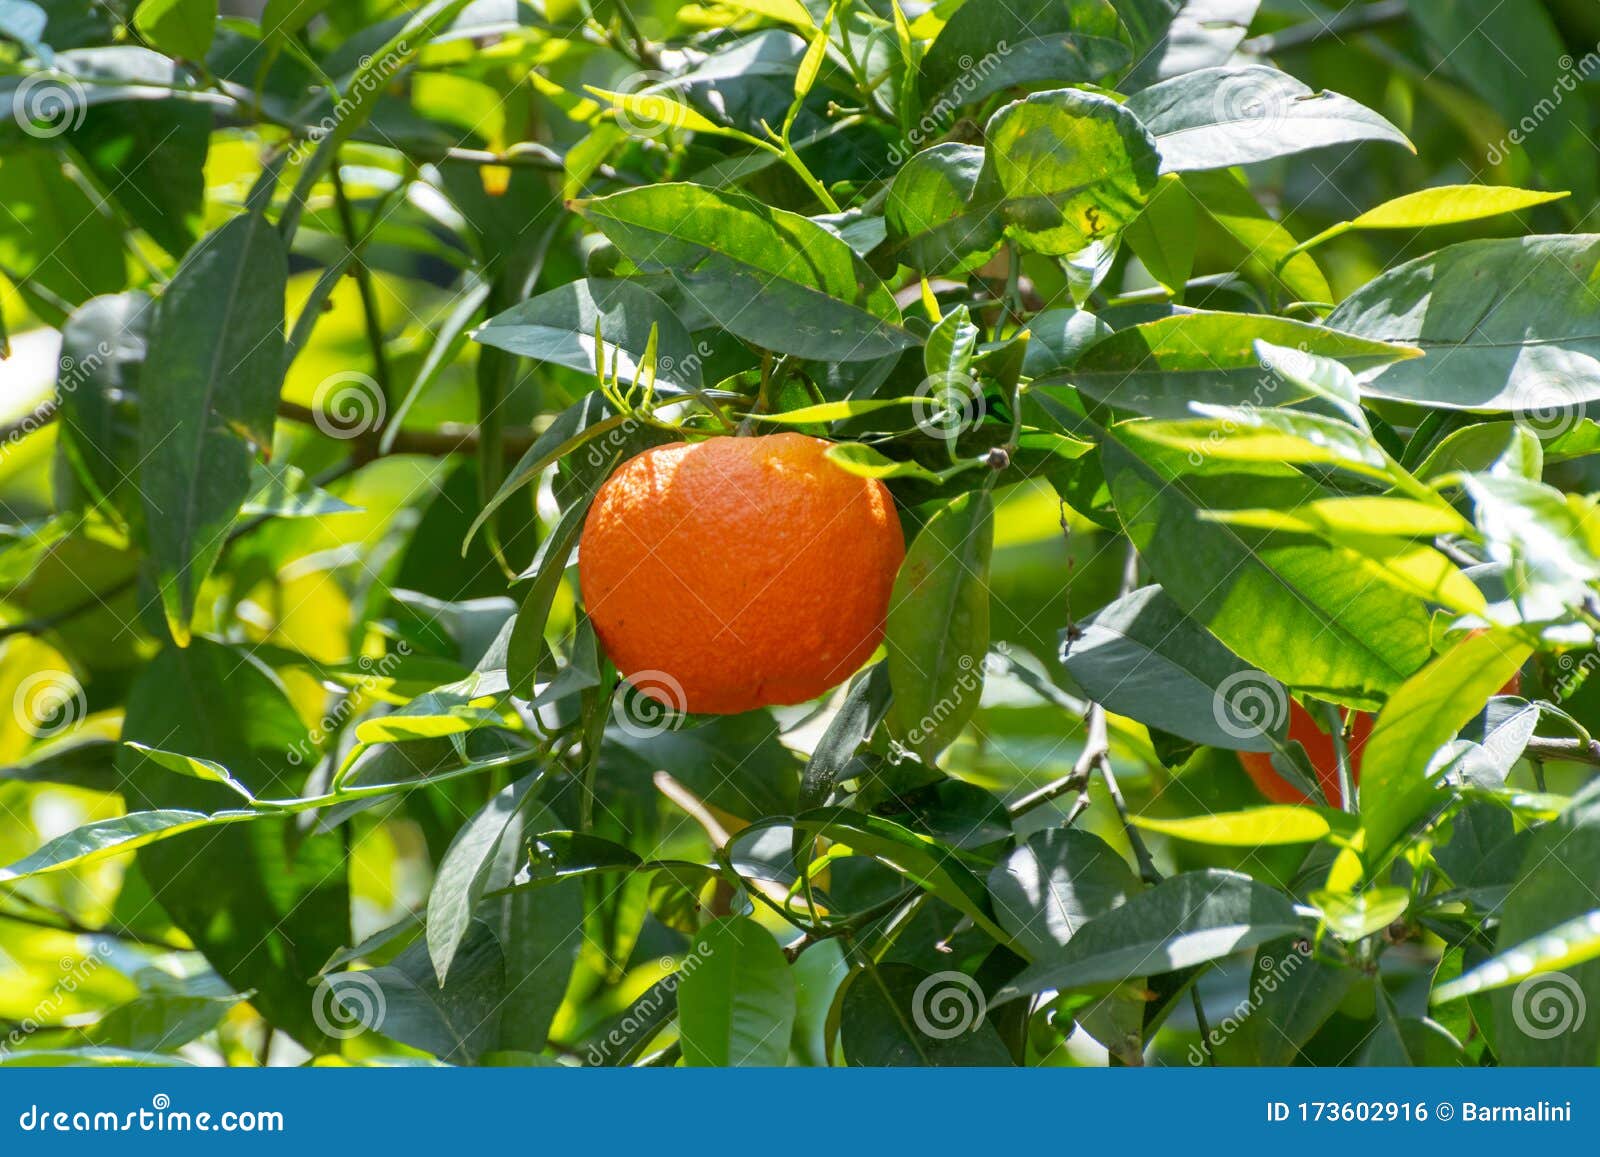 Ingredient For Tea And Aroma Oils Citrus Fruit Bergamot Hanging